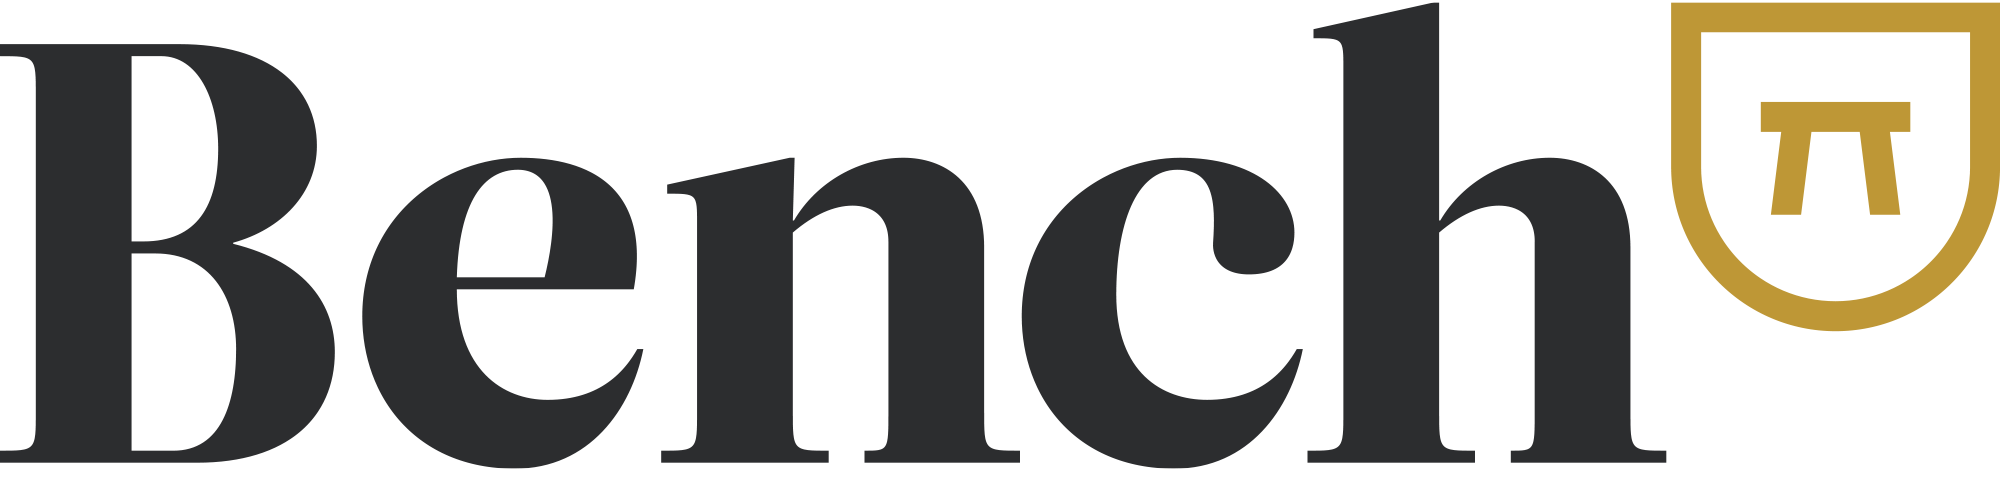 Bench+logo-gold